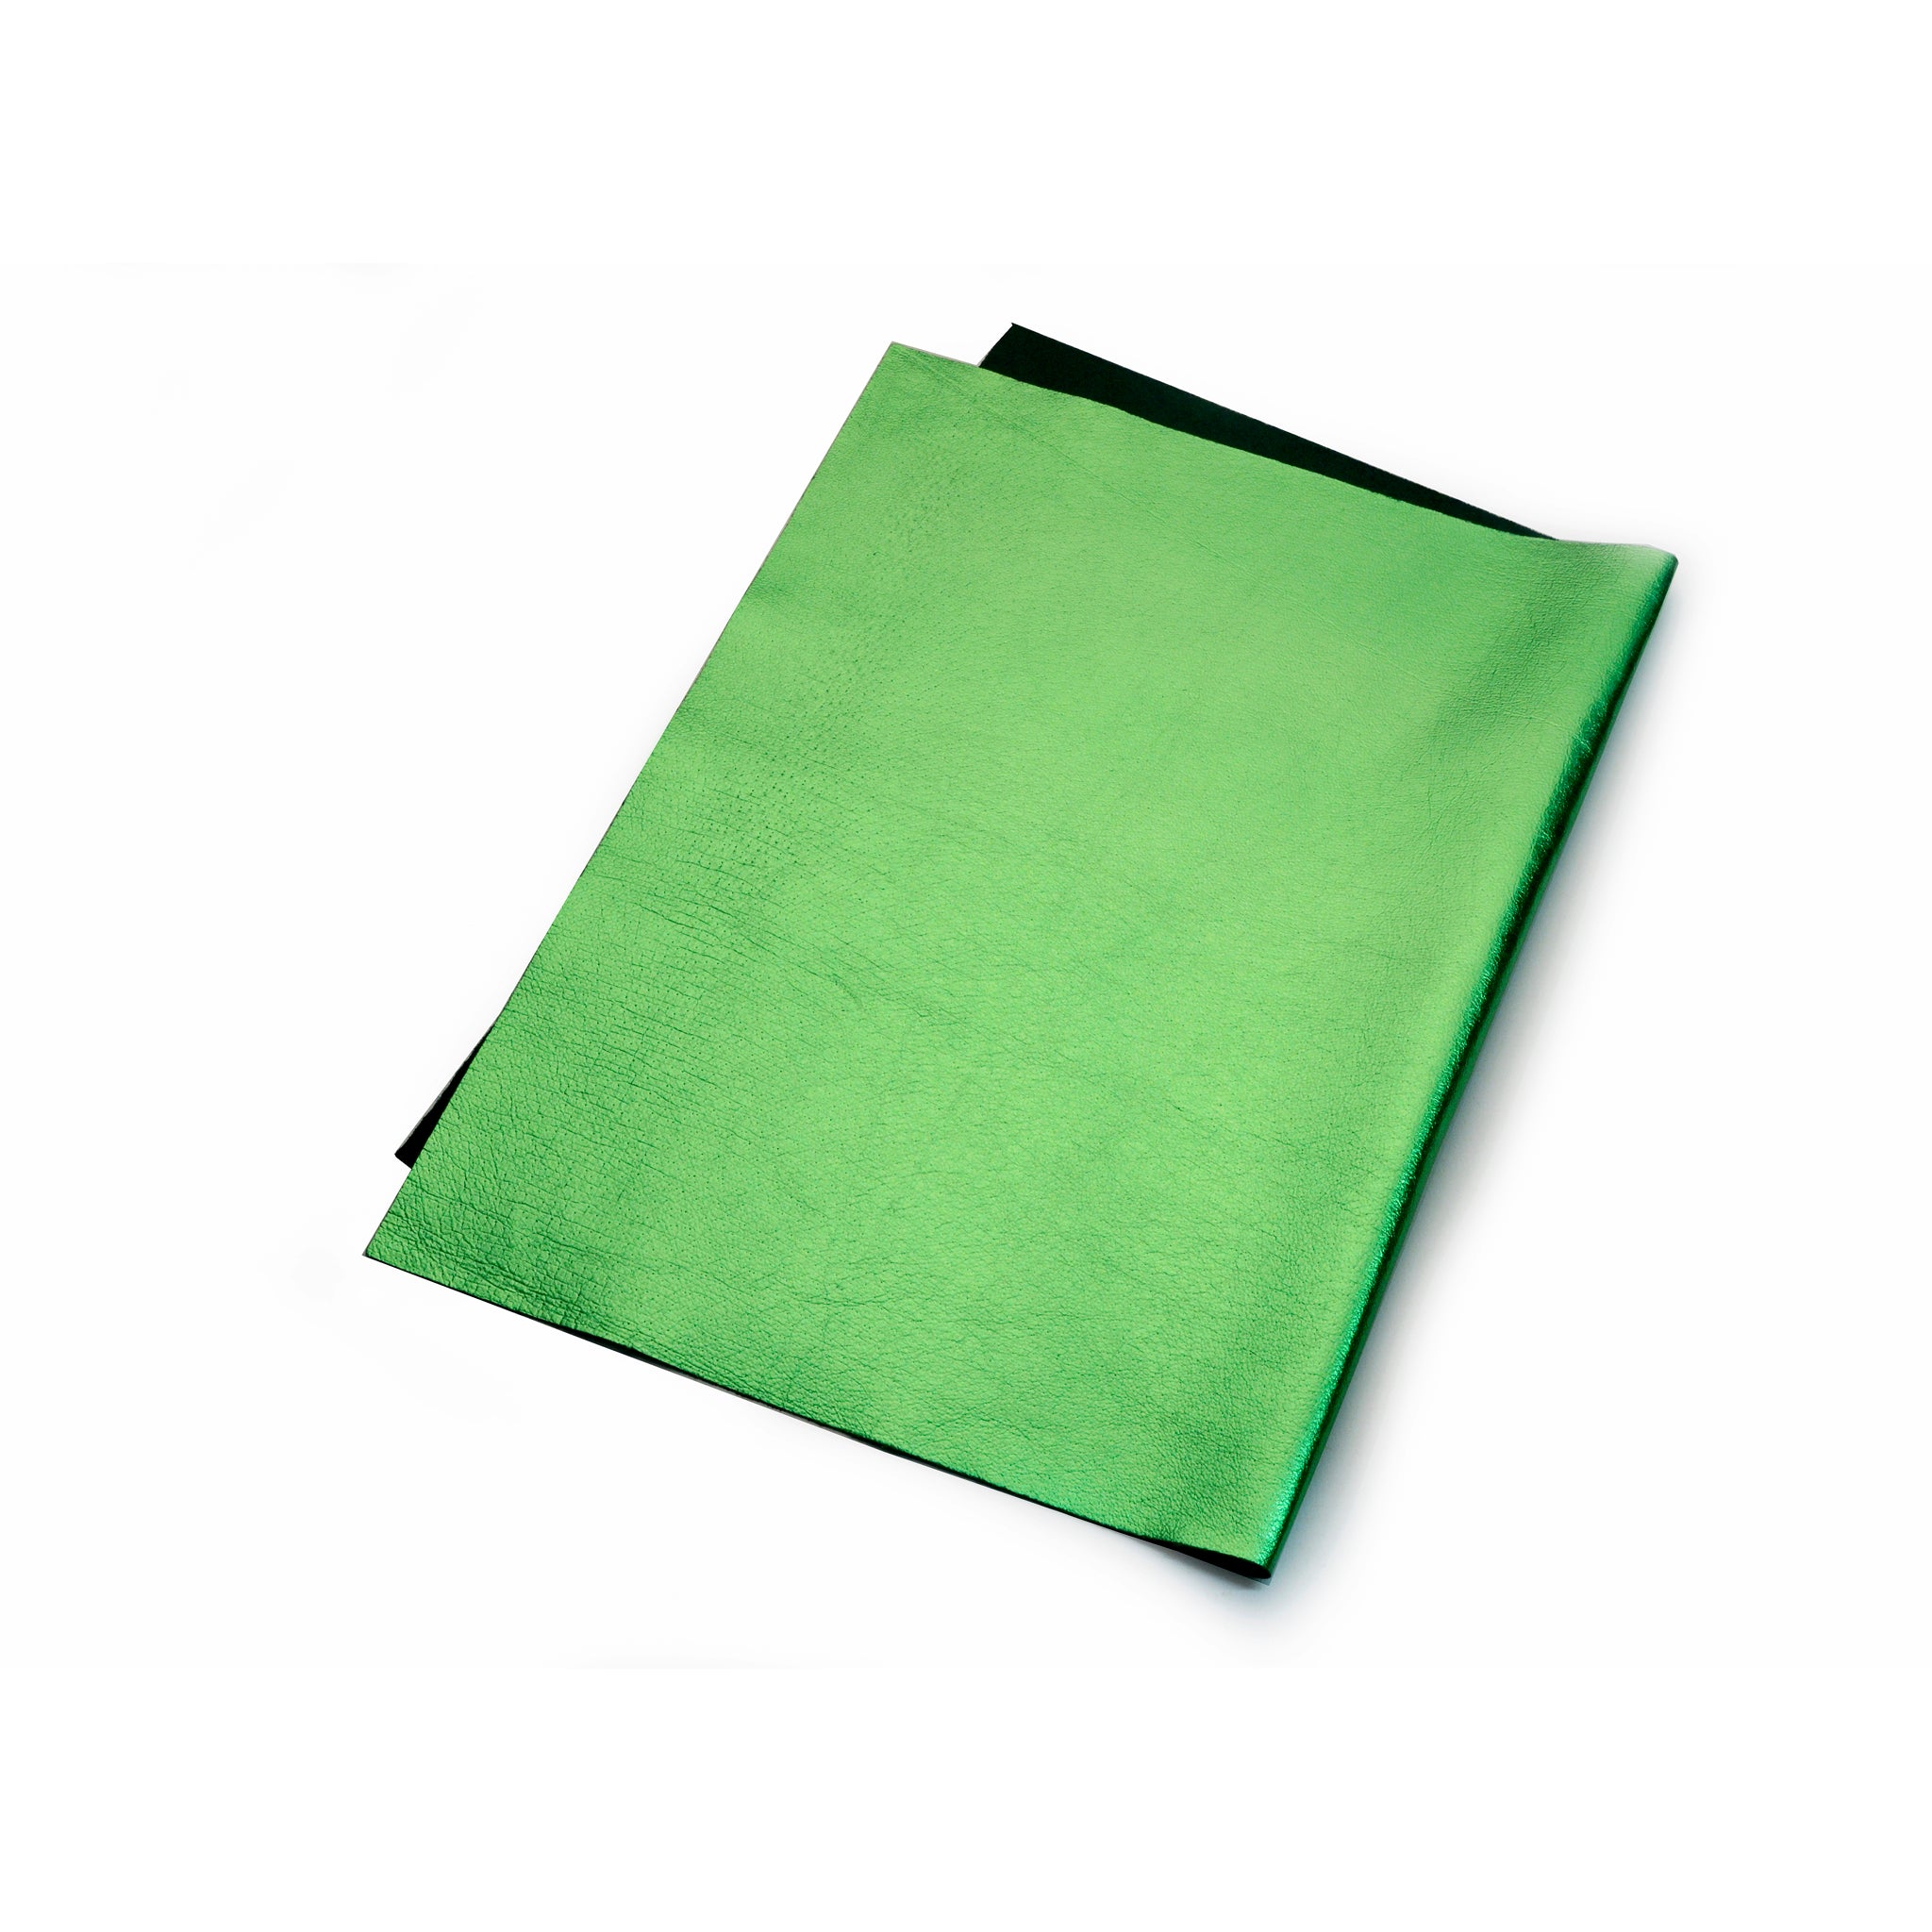 Harlequin Green Metallic Foil Leather